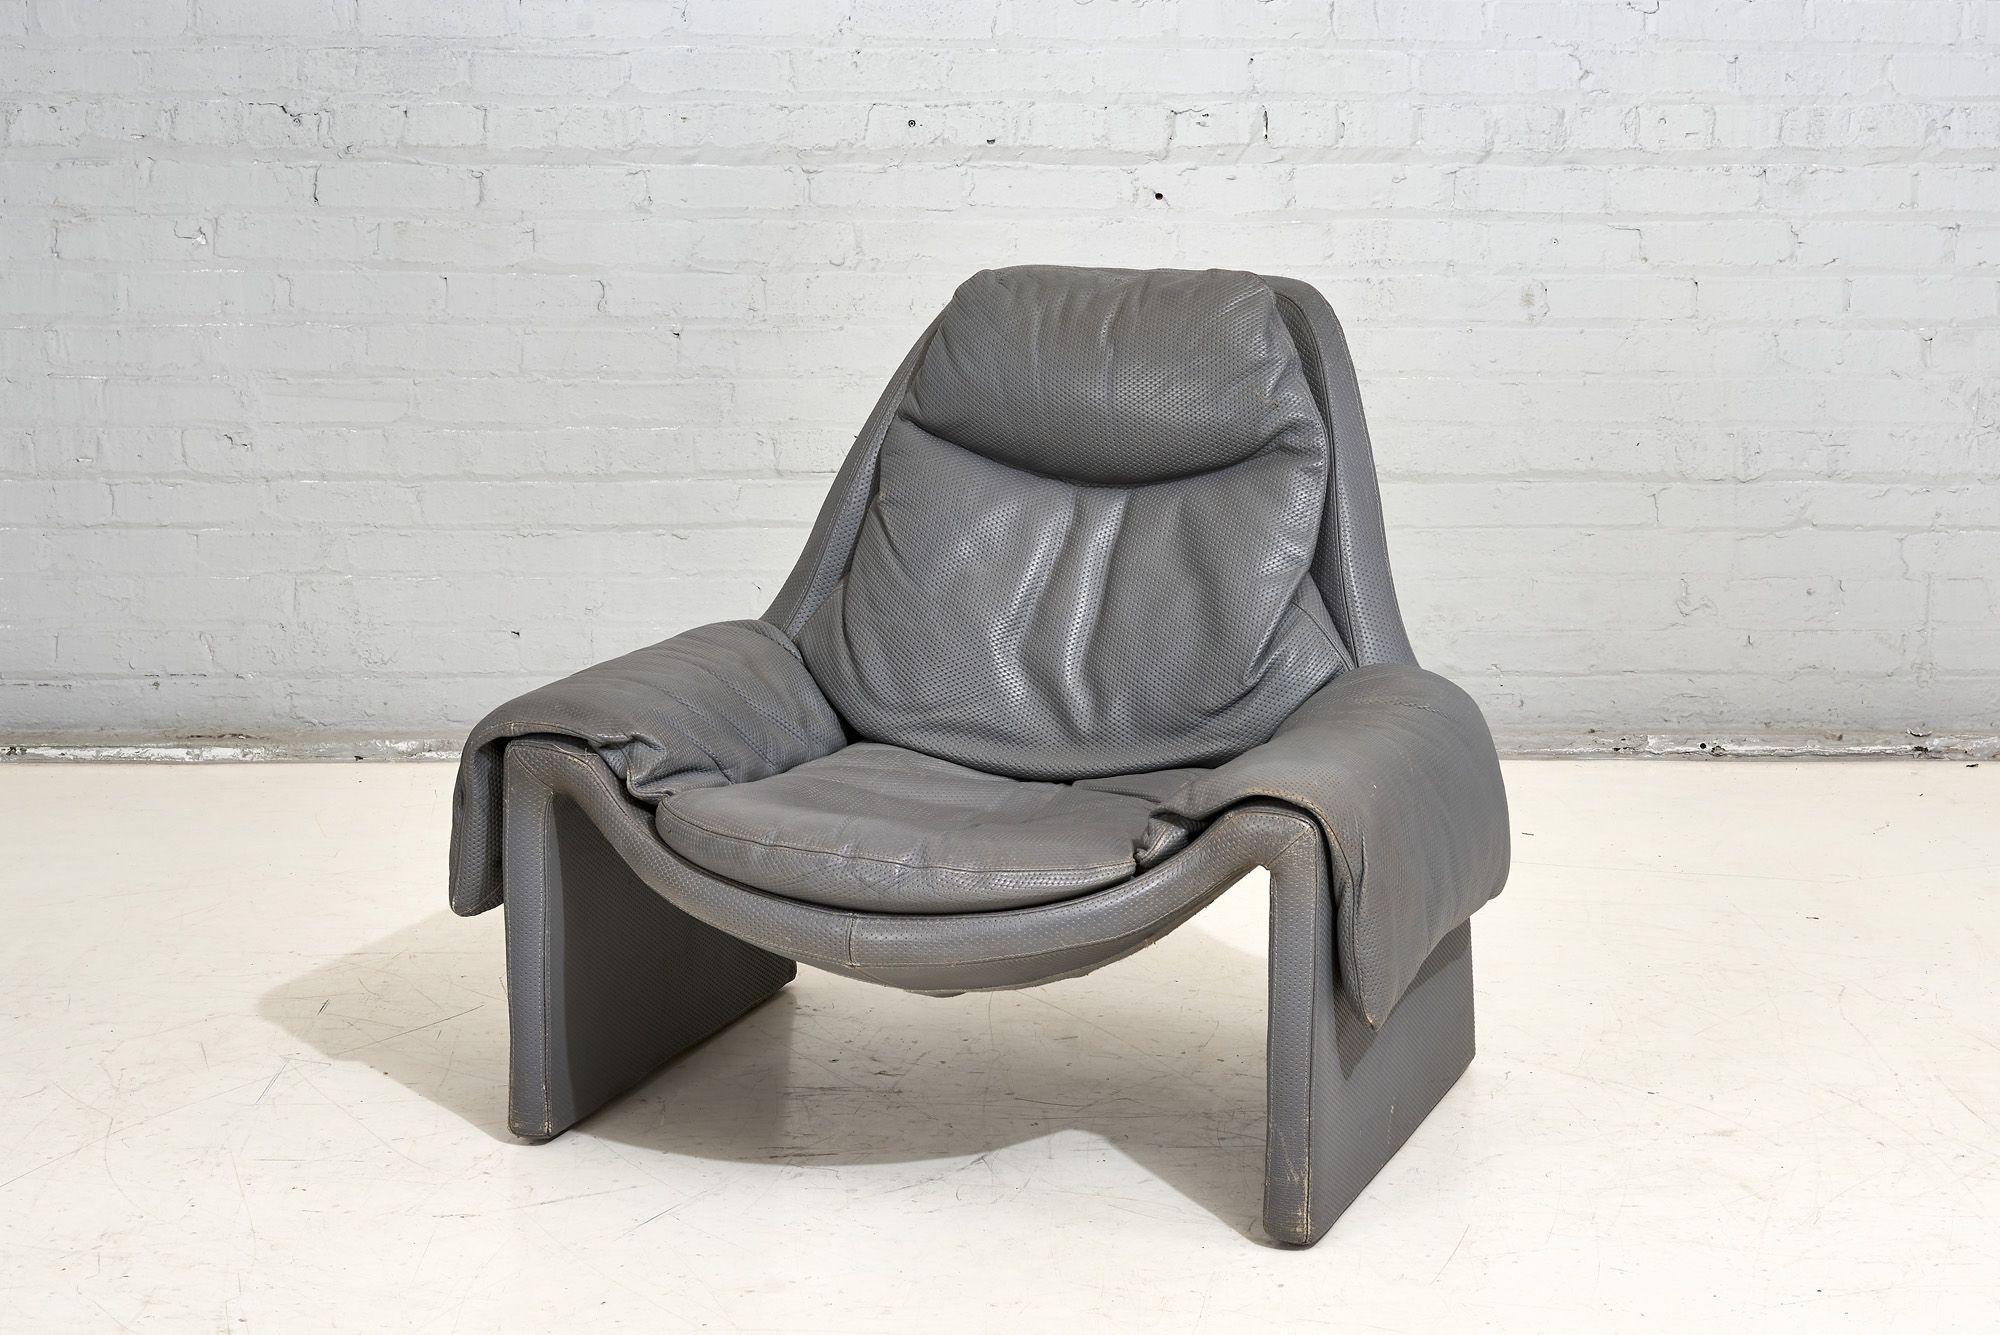 Saporiti Italia Vittorio Introini P60 Lounge Chair by Proposals, Italy, 1970 In Good Condition For Sale In Chicago, IL